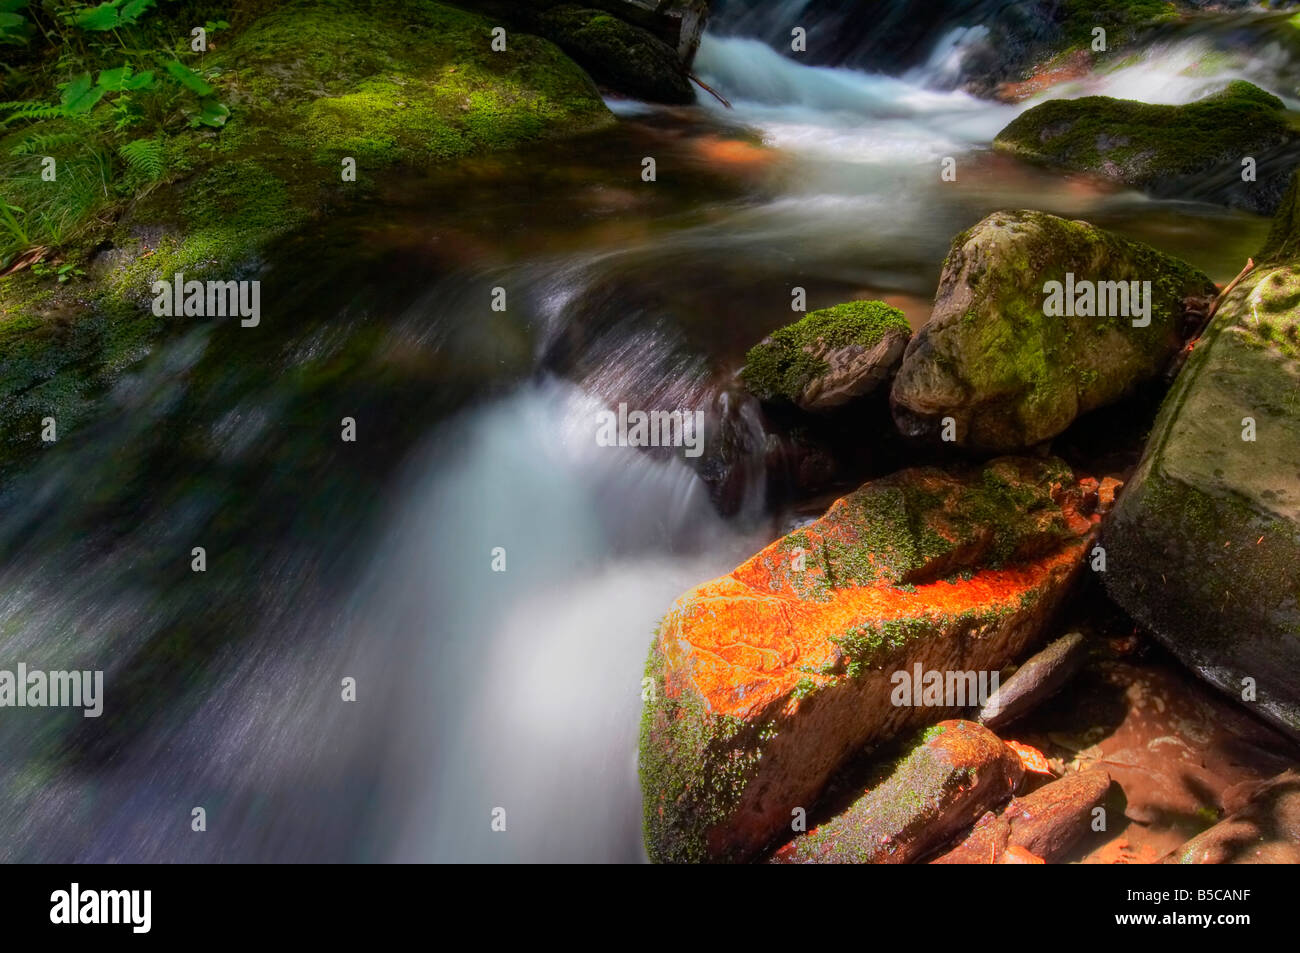 Schuss des Mauerfalls Wasser - Detail. Flusstal des Streams Bila Opava - Naturschutzgebiet - Natur bewahren. Stockfoto